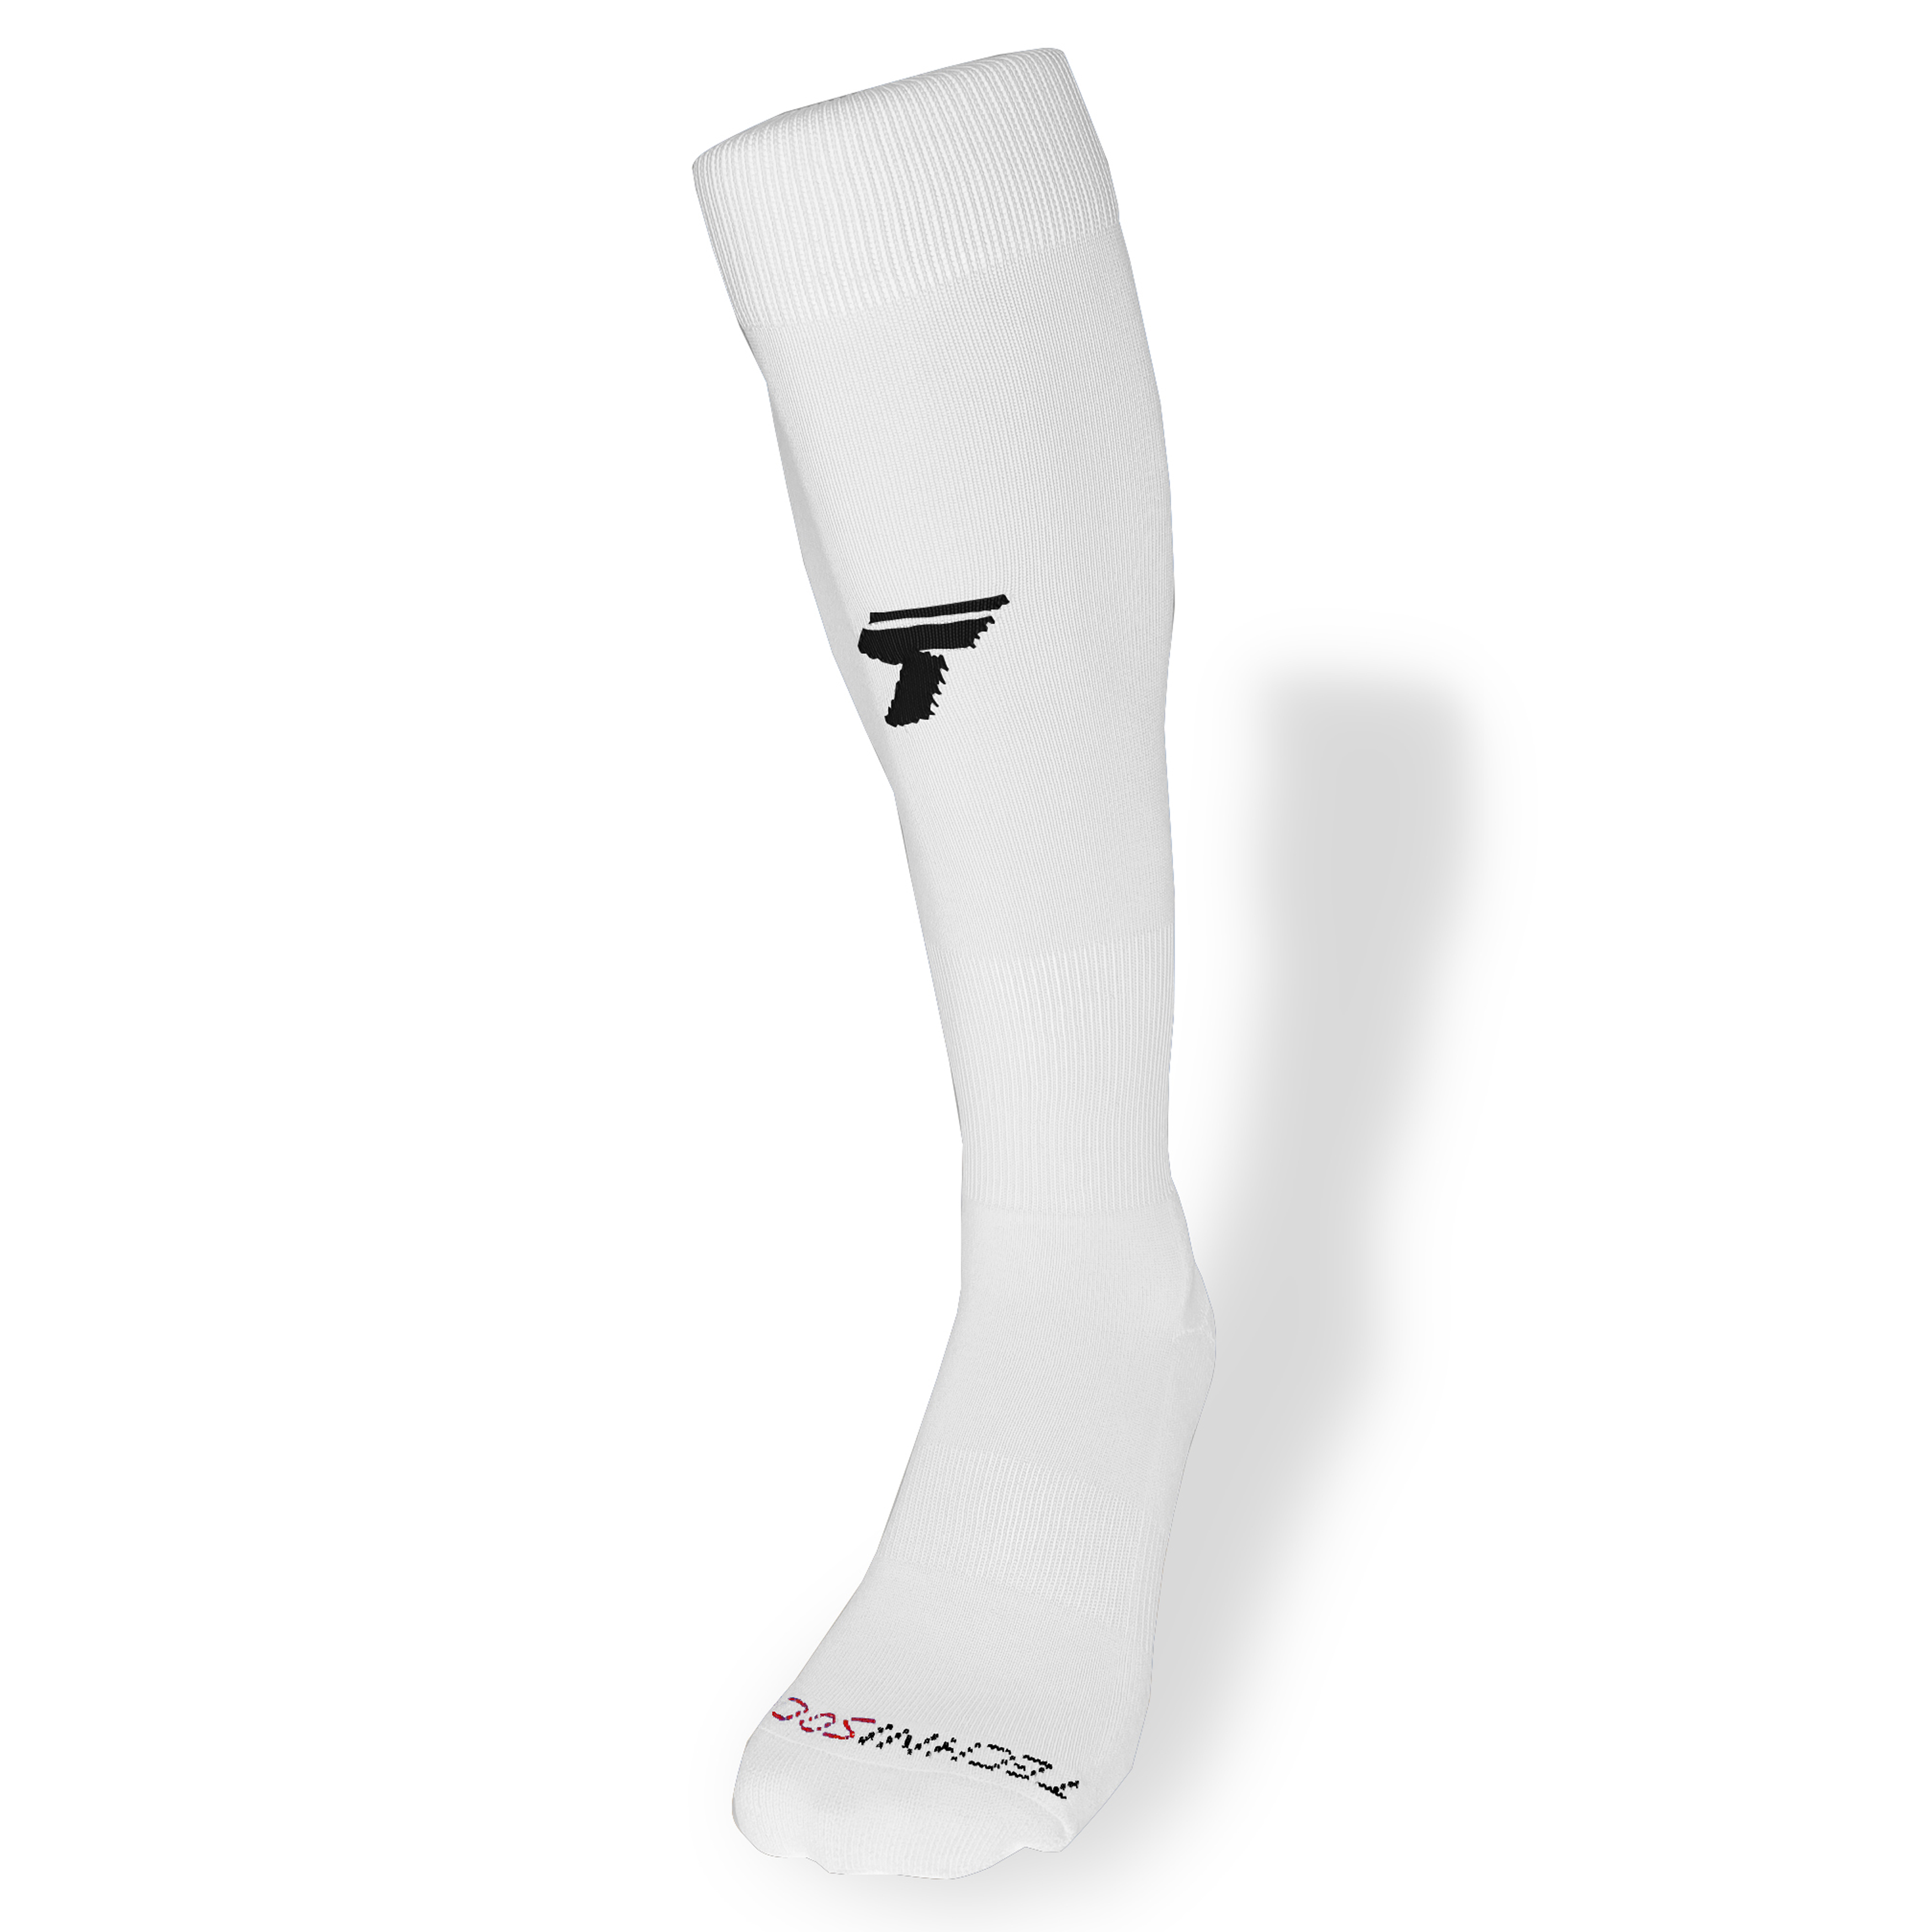 Pro Touch Full Length Unisex Team Sports Football Rugby Hockey Socks White 